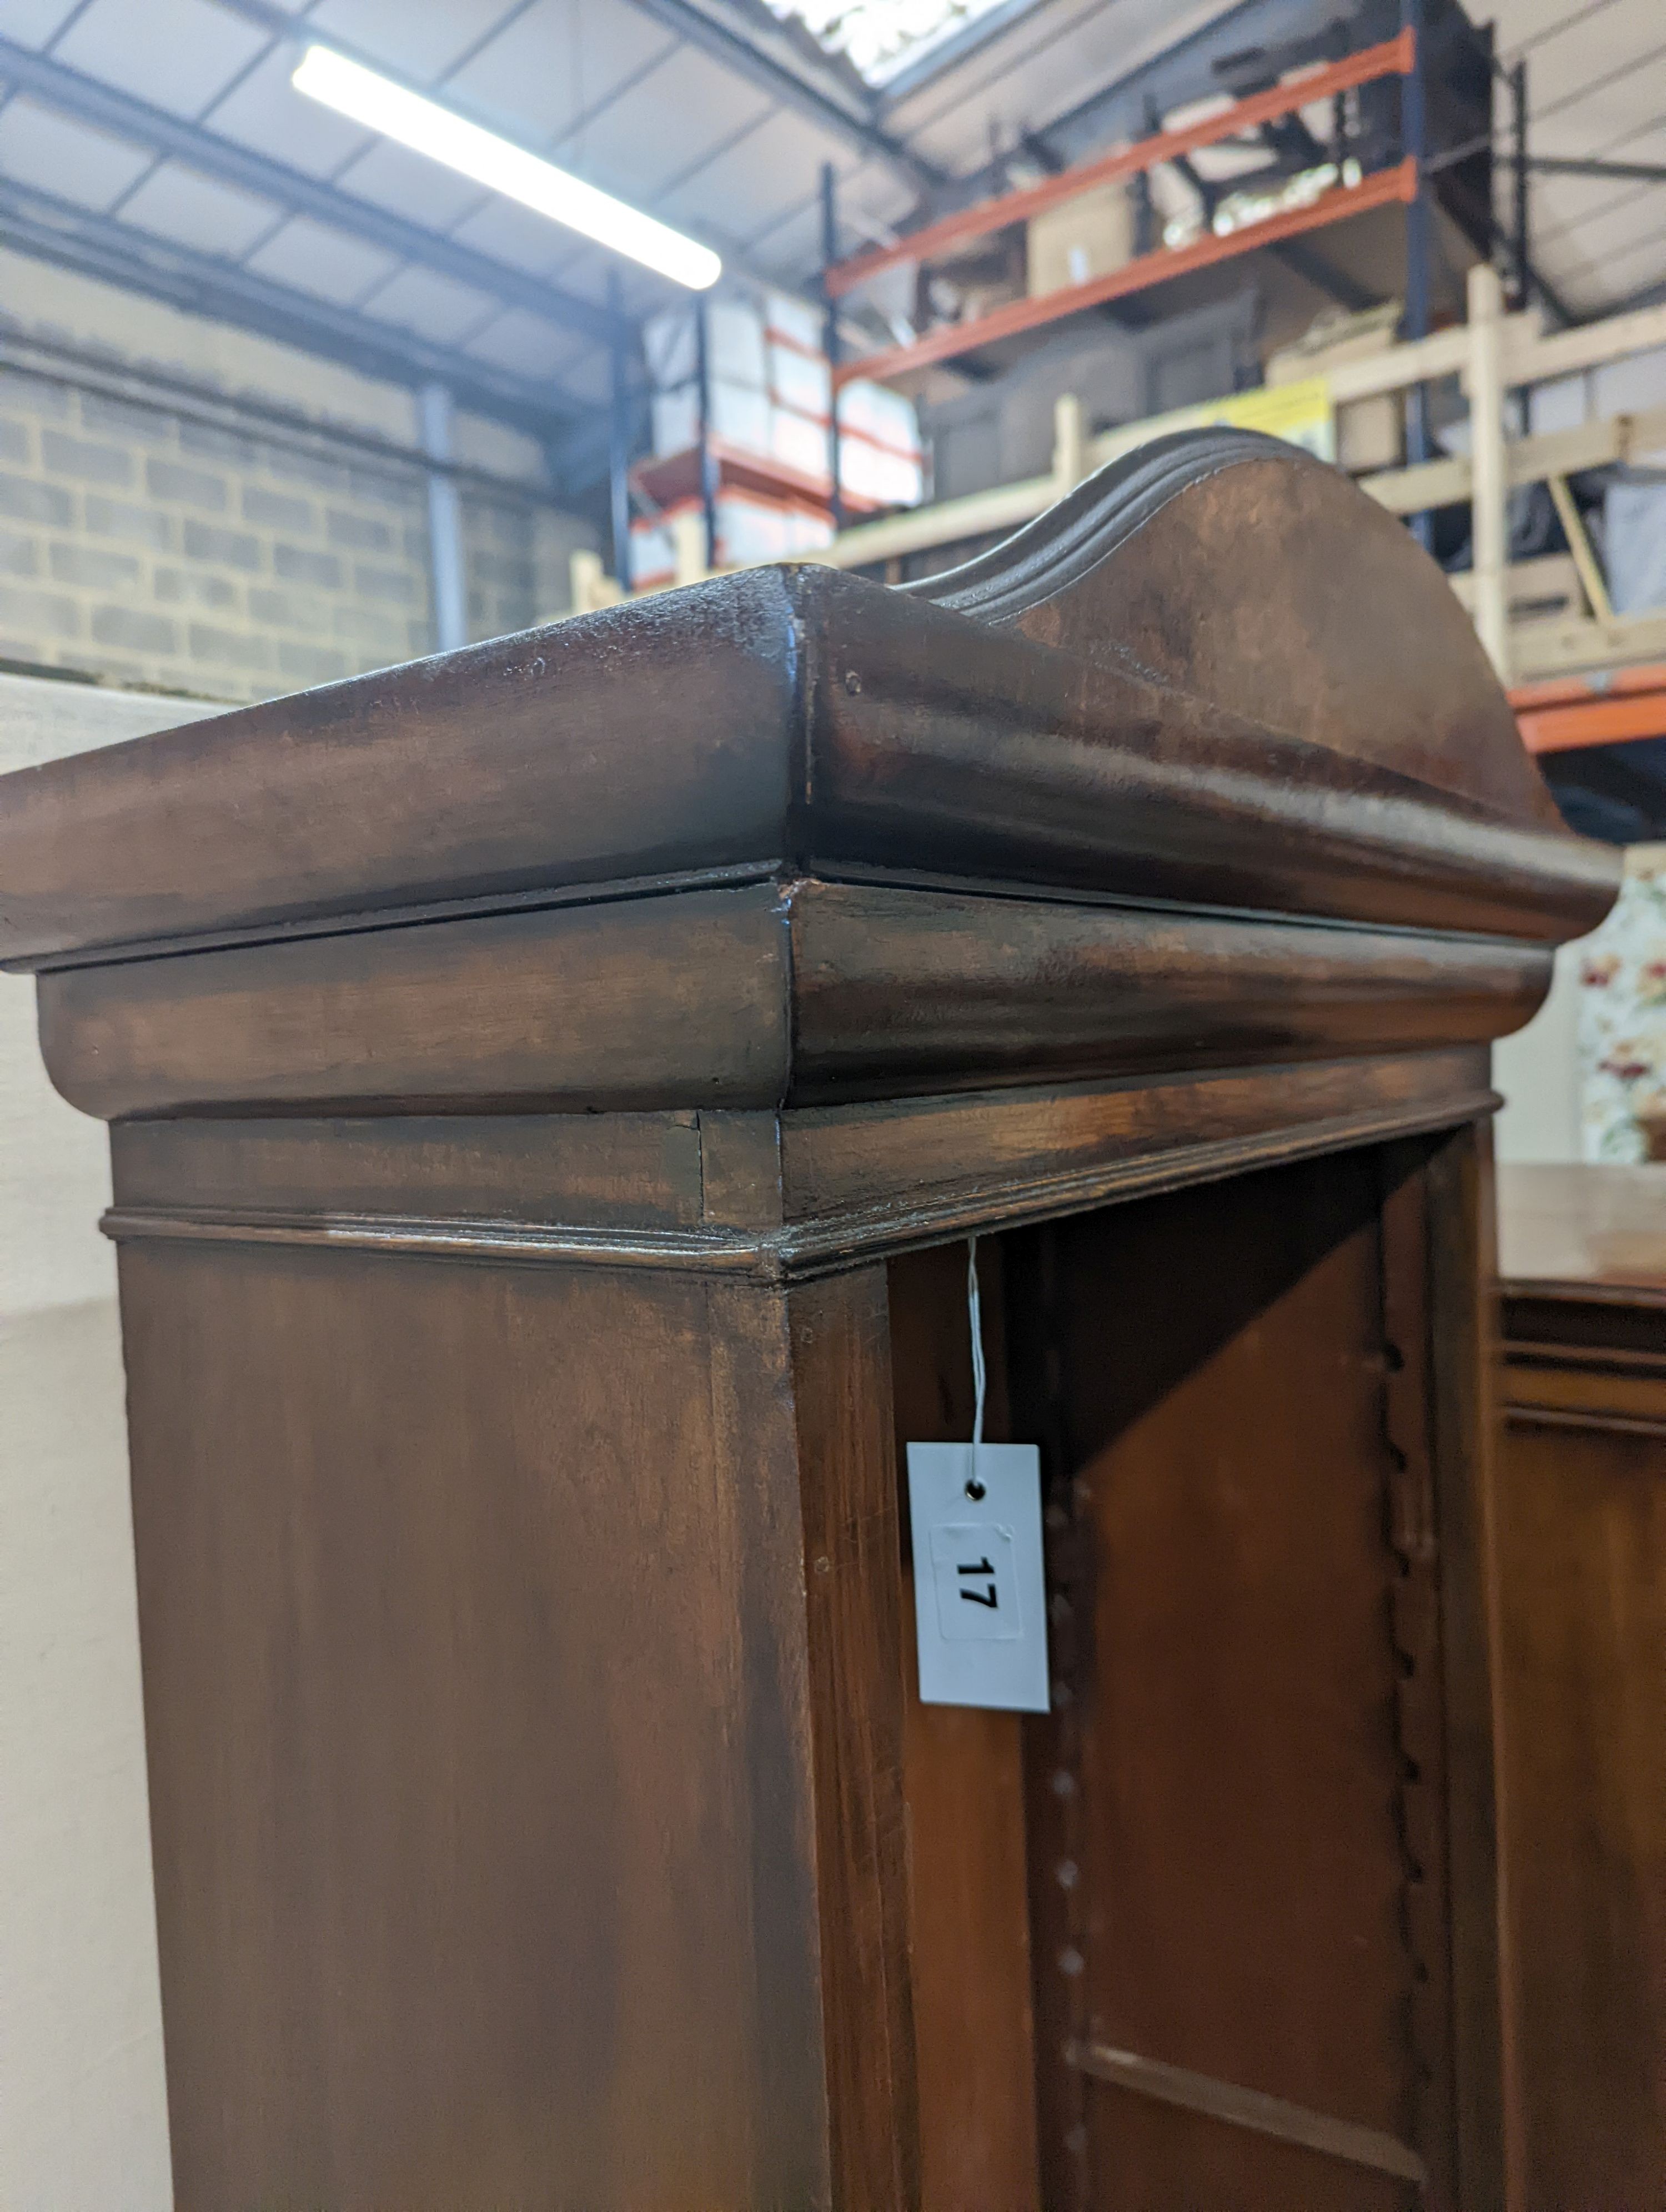 A George II style narrow walnut open bookcase, width 65cm, depth 30cm, height 184cm